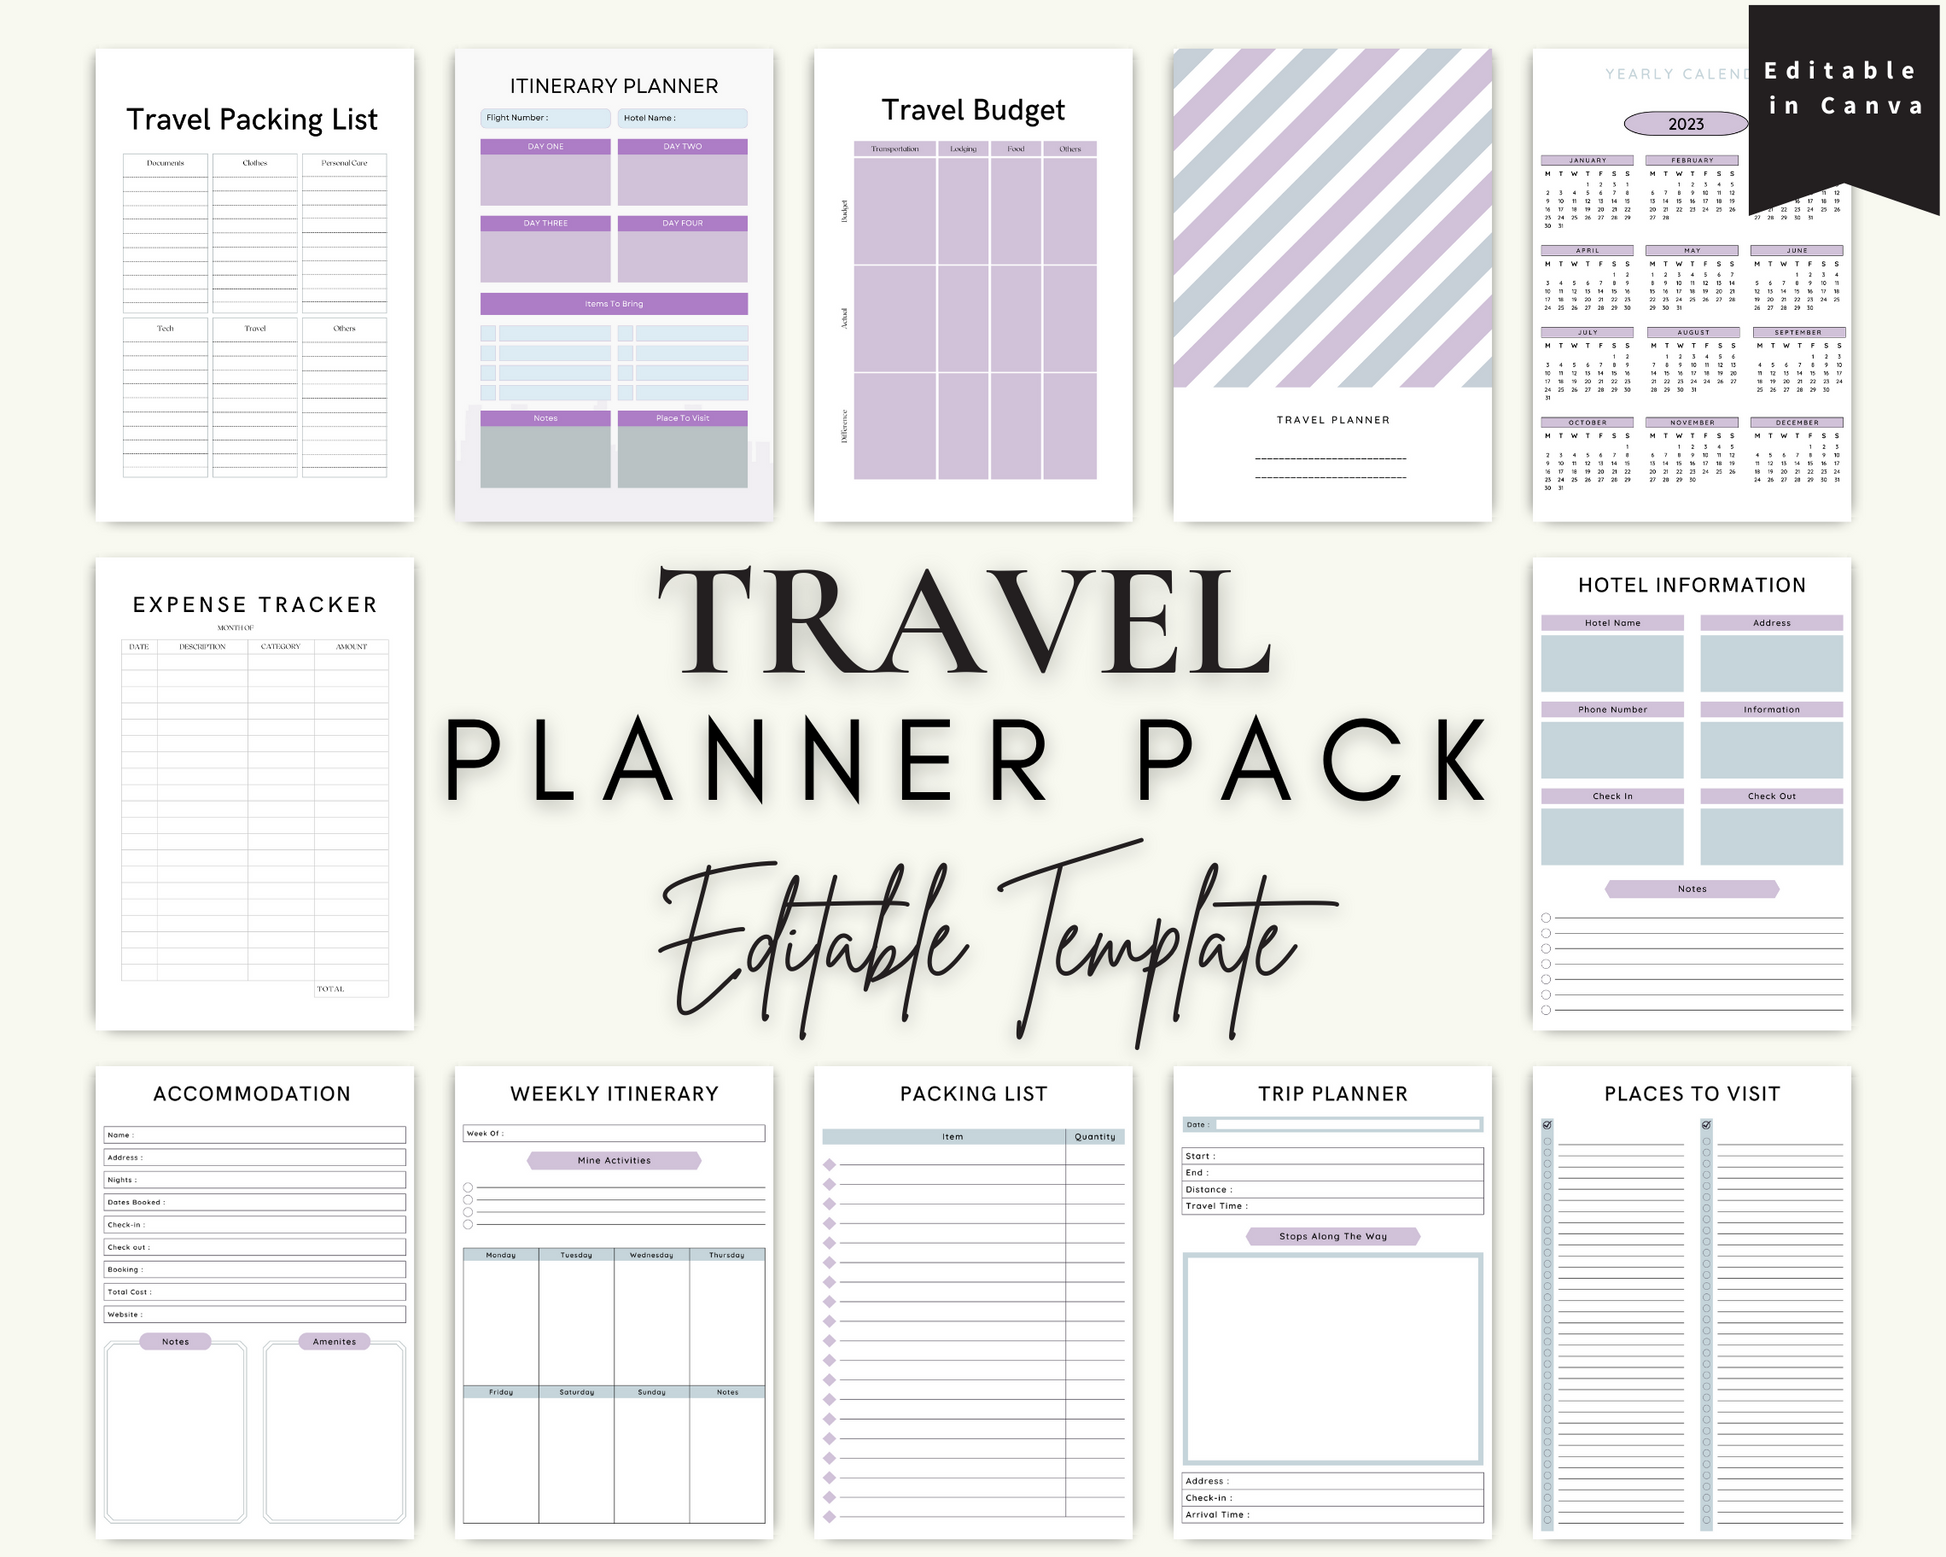 Ultimate Travel Checklist Editable Travel Checklist Printable